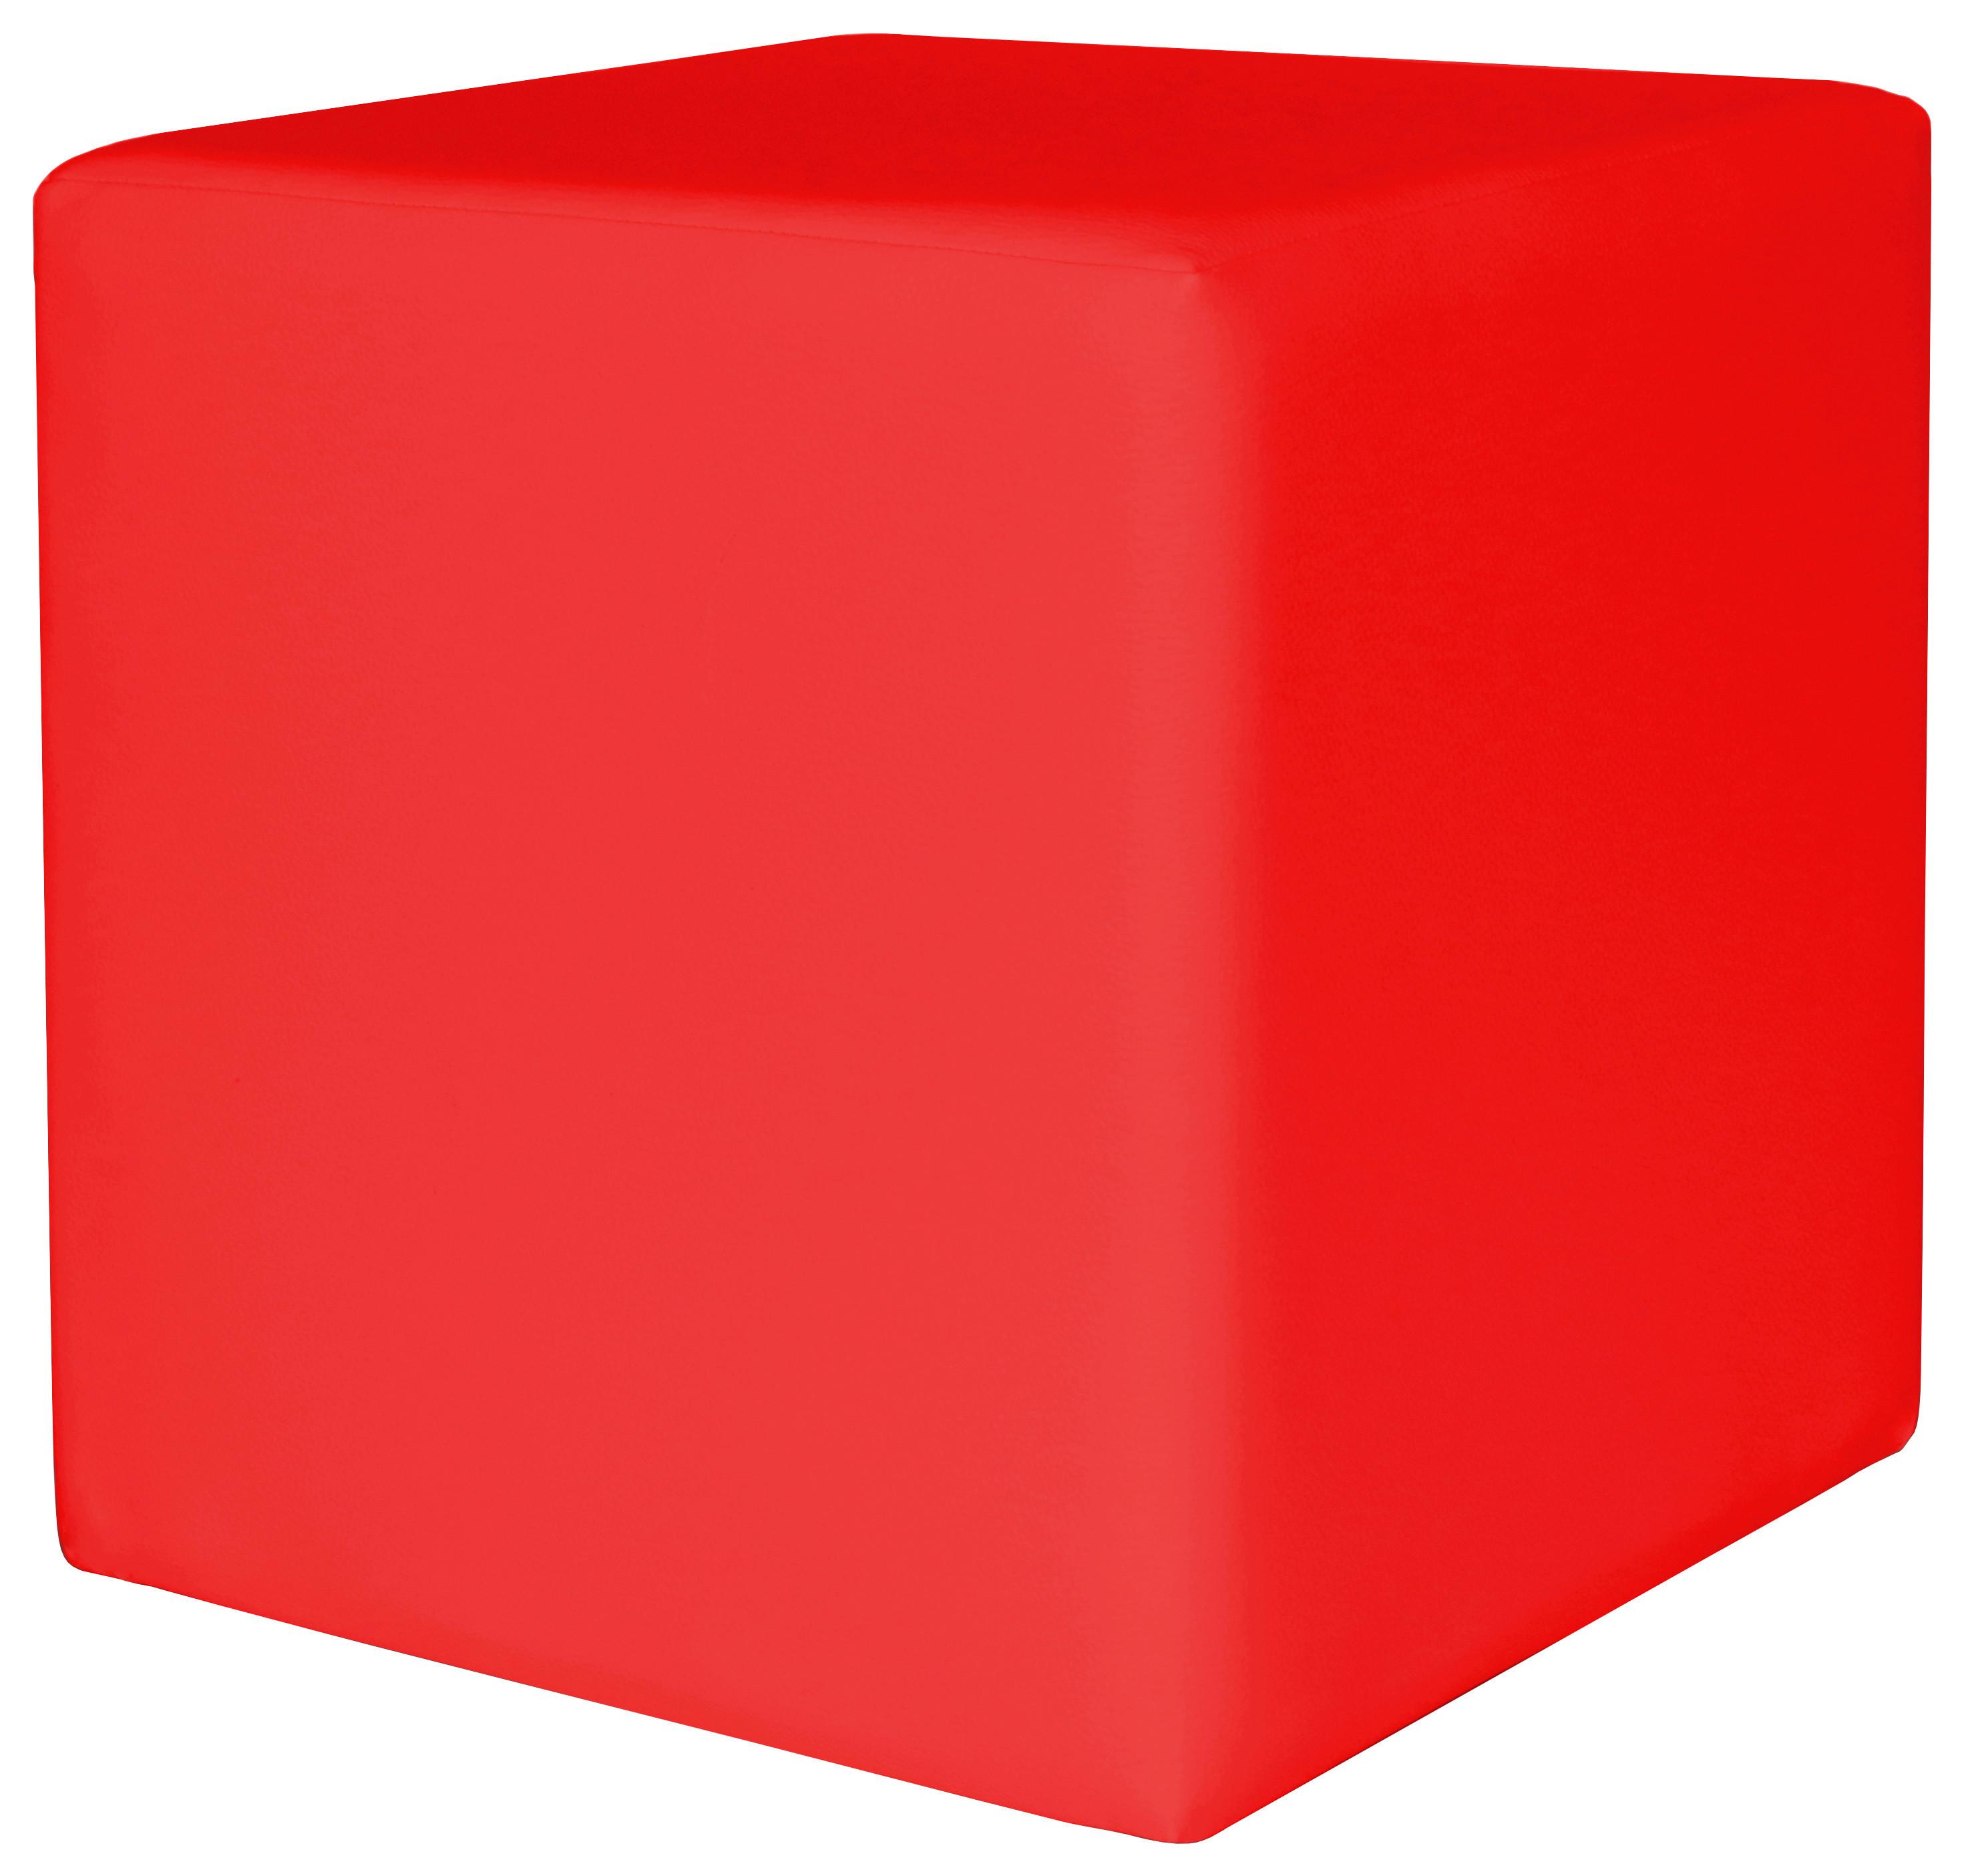 Tabure Colorfull Cube - bež/crvena, Modern, tekstil/plastika (40/40/42cm) - Based